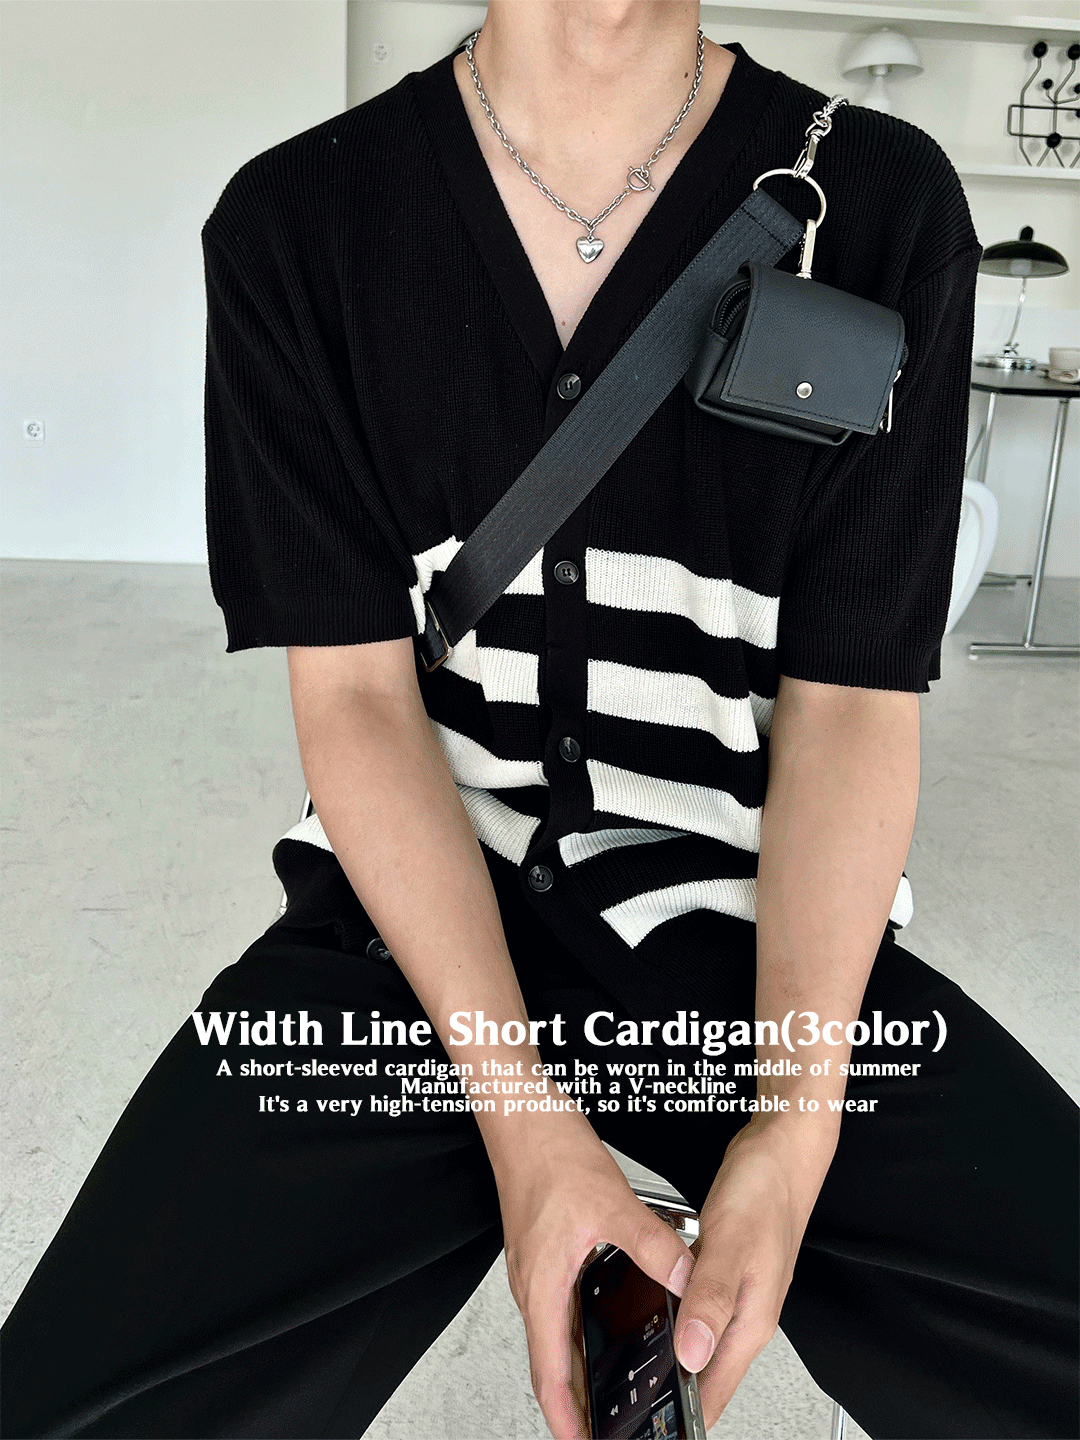 Width Line Short Cardigan(3color)